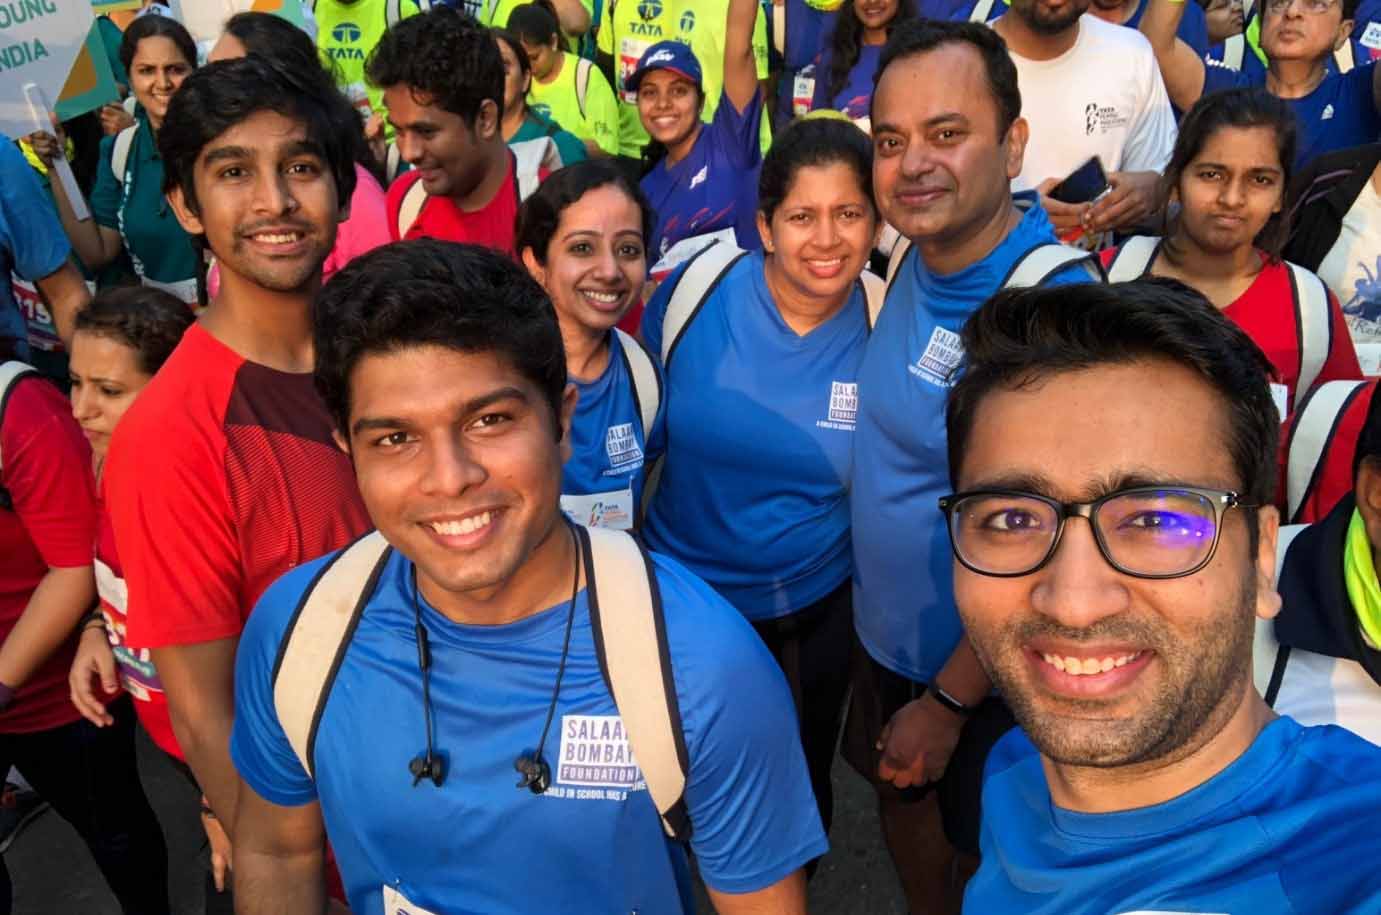  Employees in Mumbai Run the Tata Mumbai Marathon to Raise Funds for Salaam Bombay Foundation